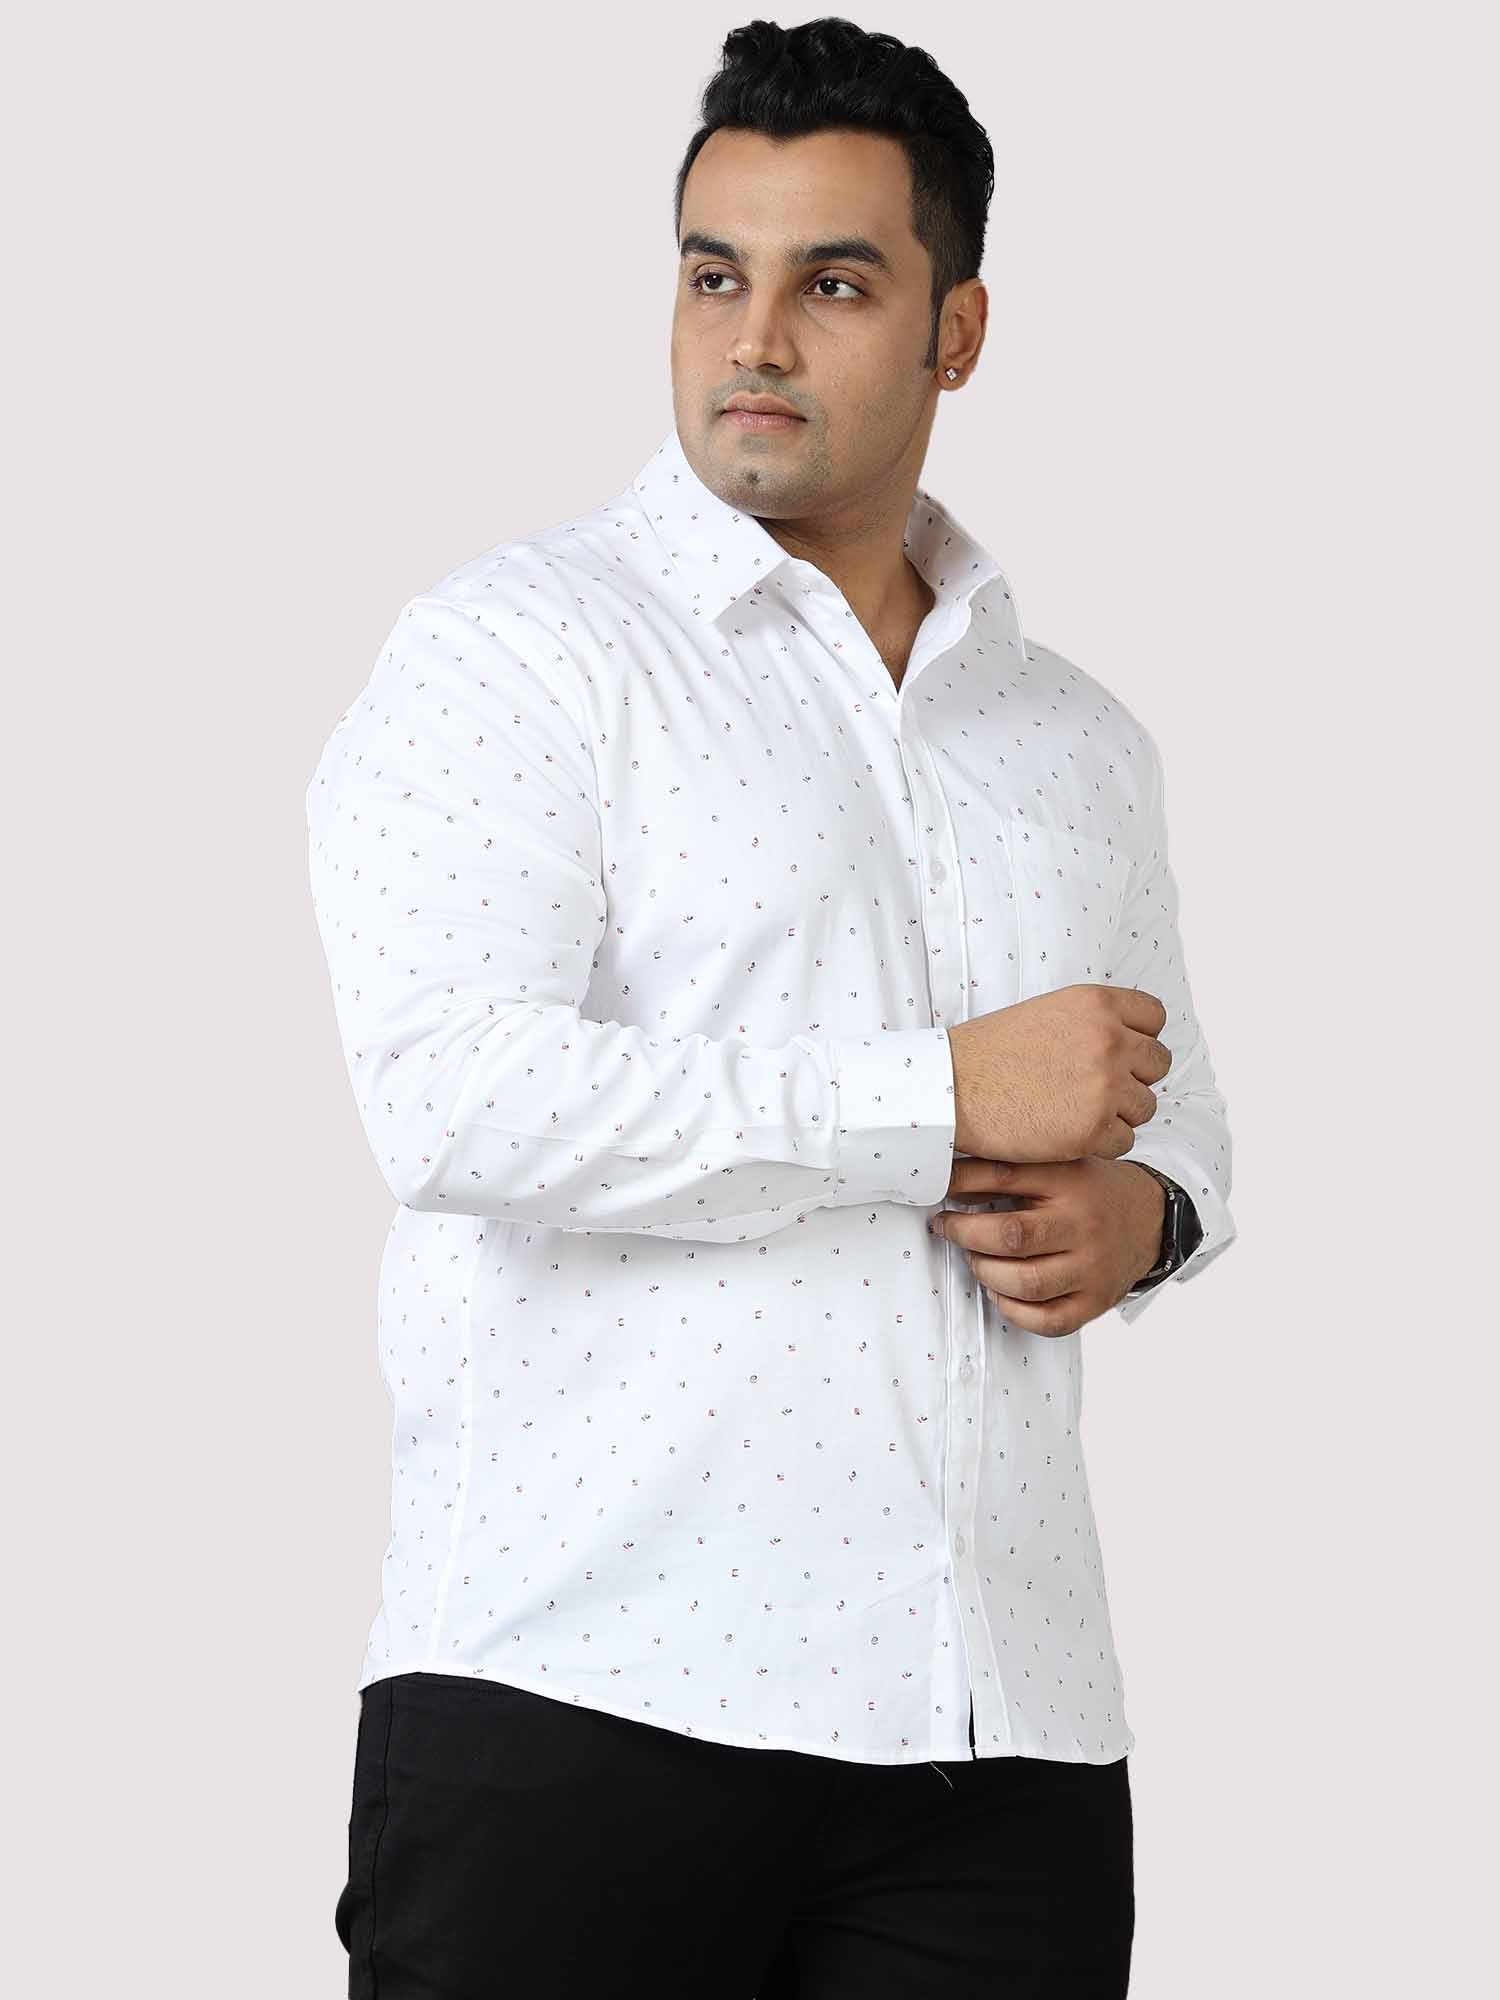 Exotic Printed Cotton Full Shirt Men's Plus Size